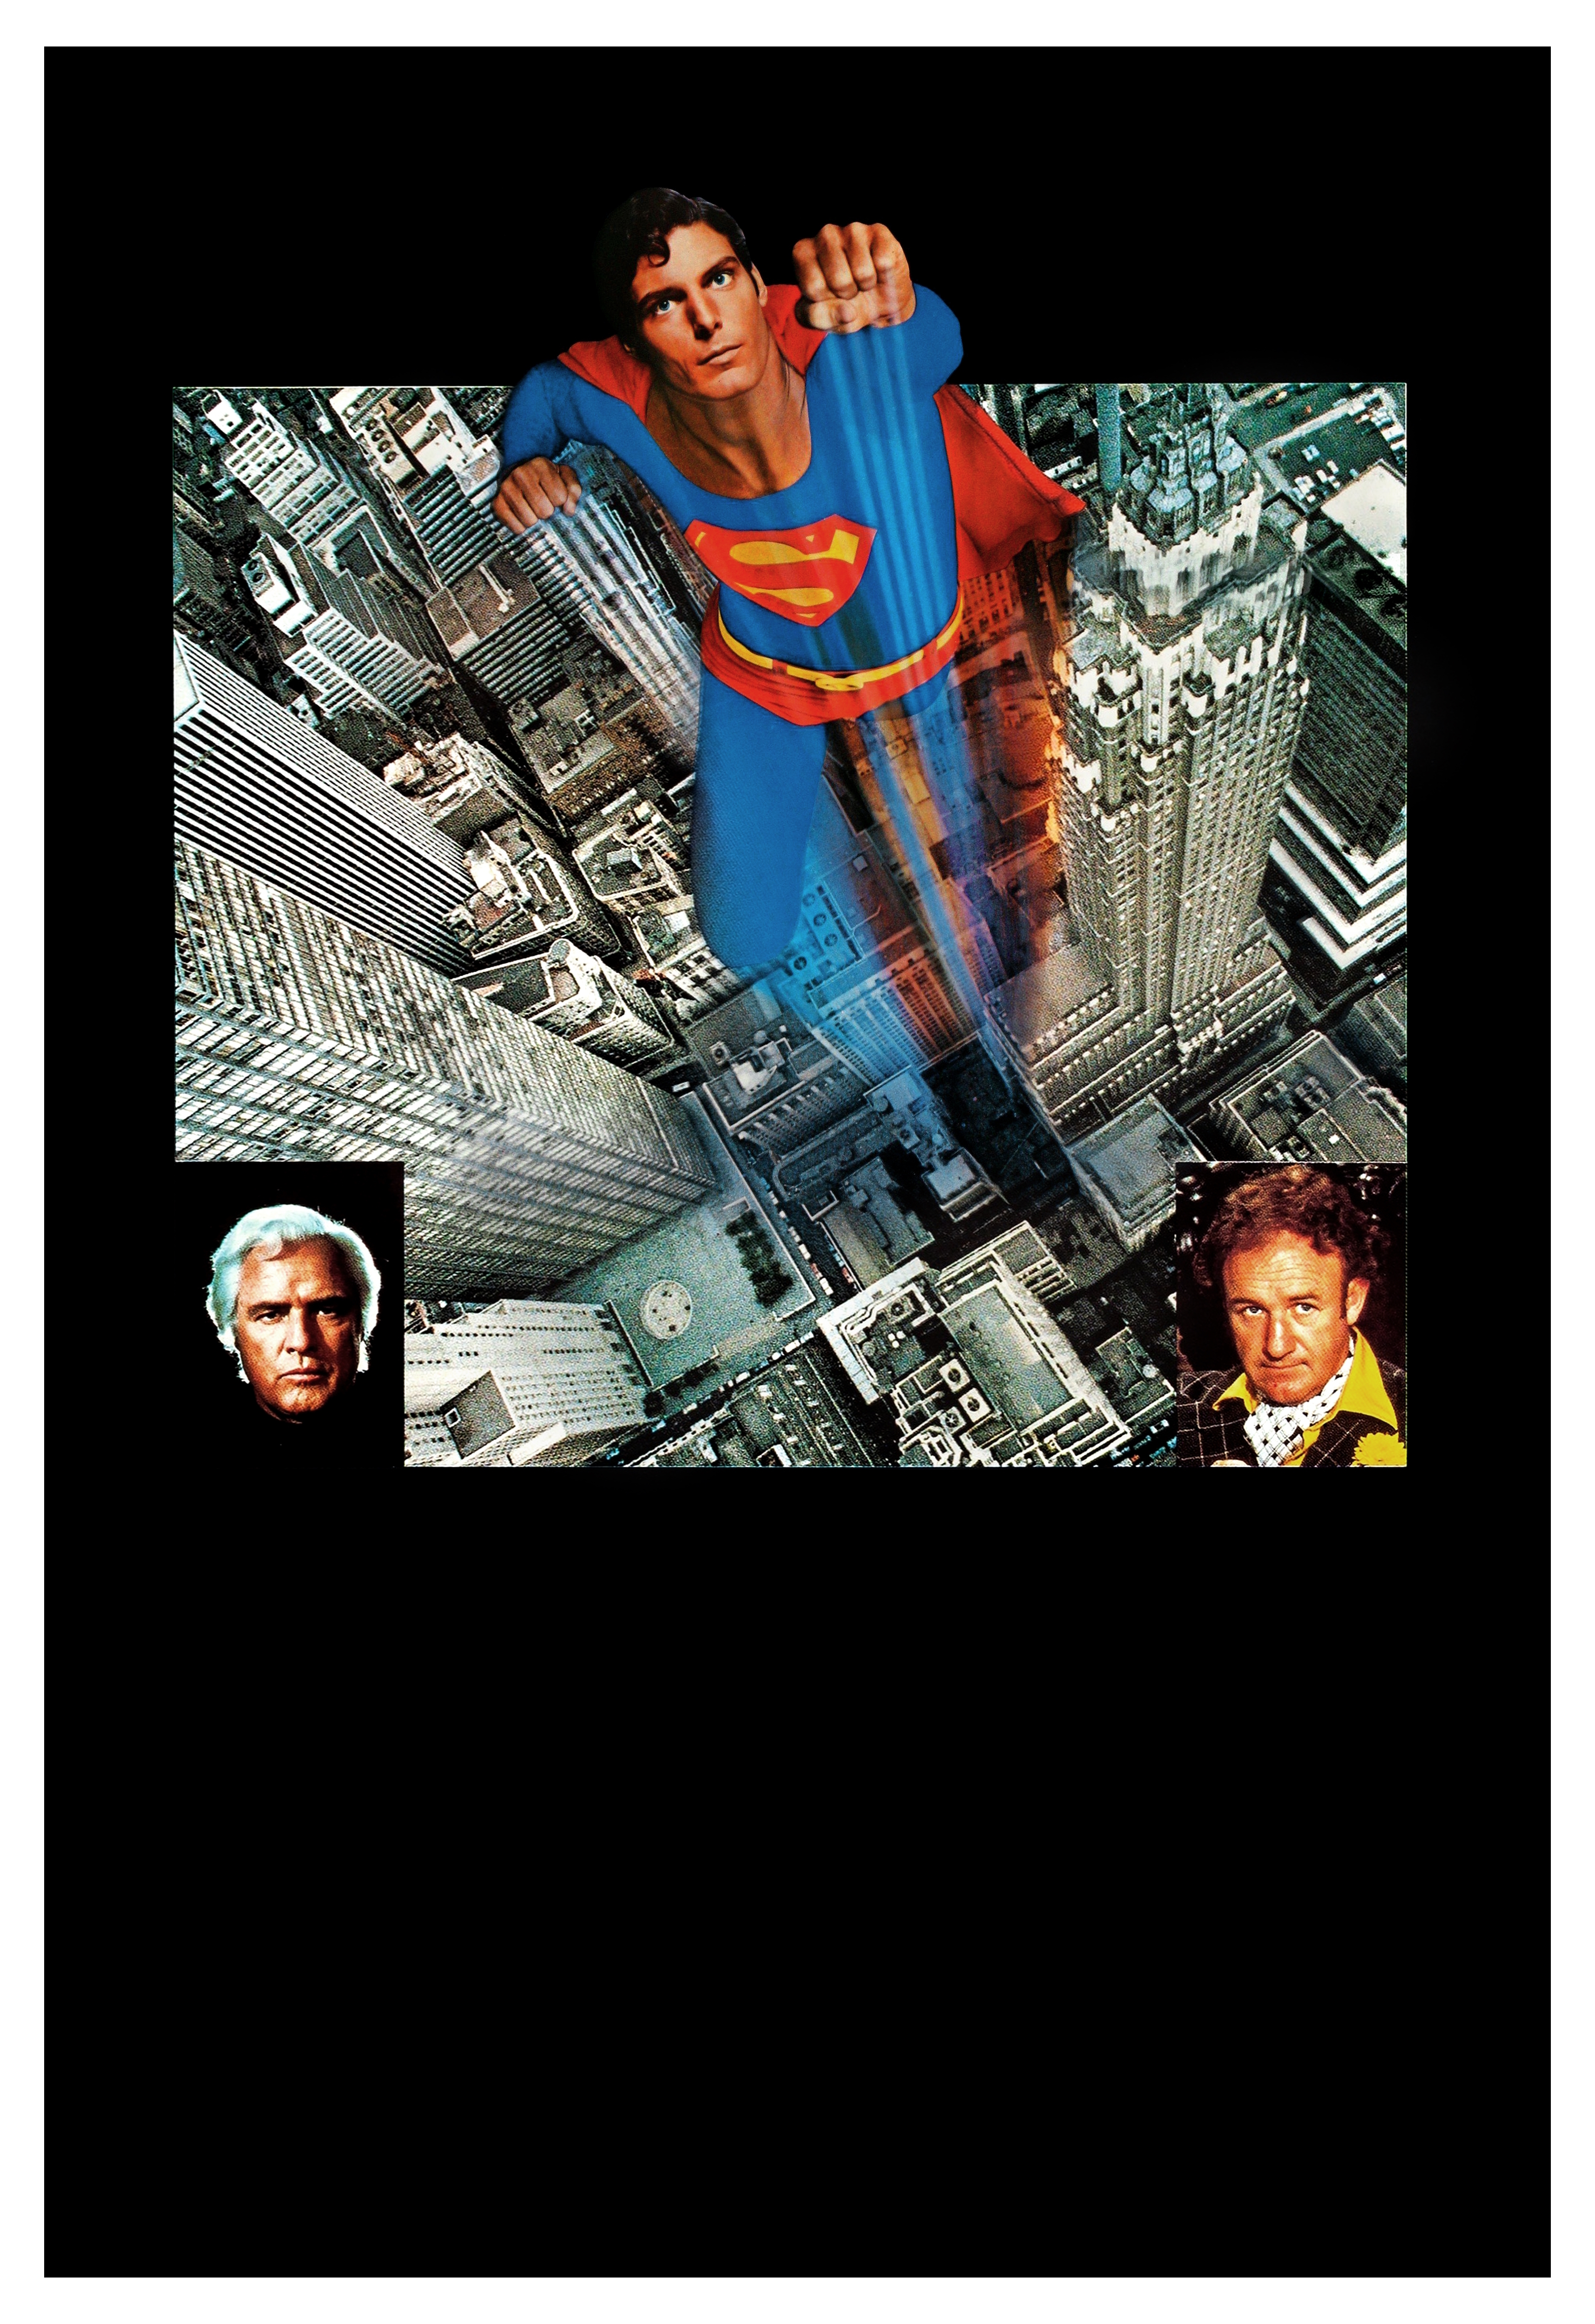 Superman (1978) Picture